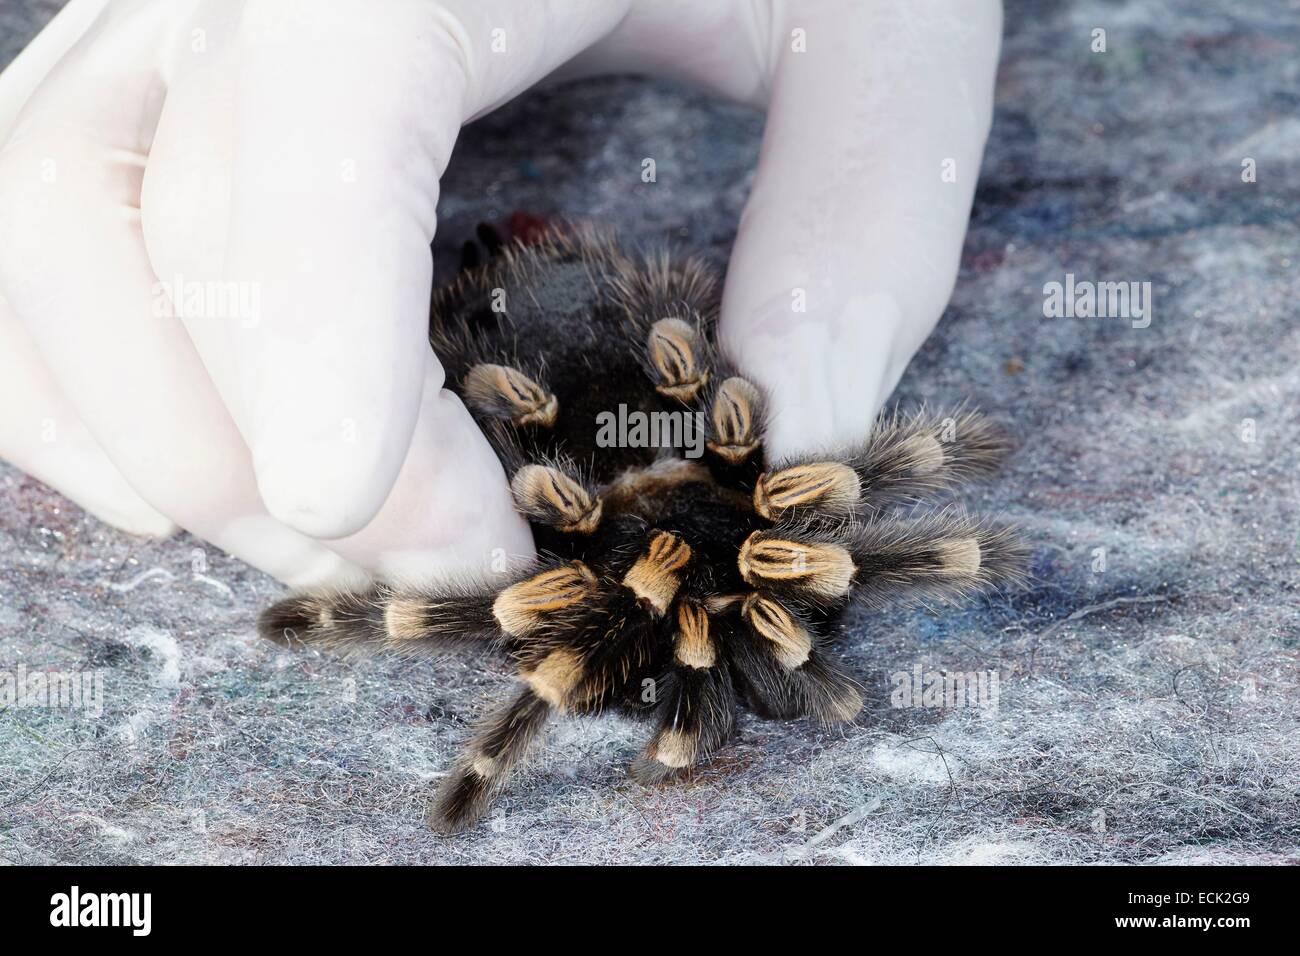 France, Paris, National Museum of Natural History, Mygalomorphae, Theraphosidae, Manipulation of a Mexican redknee tarantula (Brachypelma smithi) Stock Photo